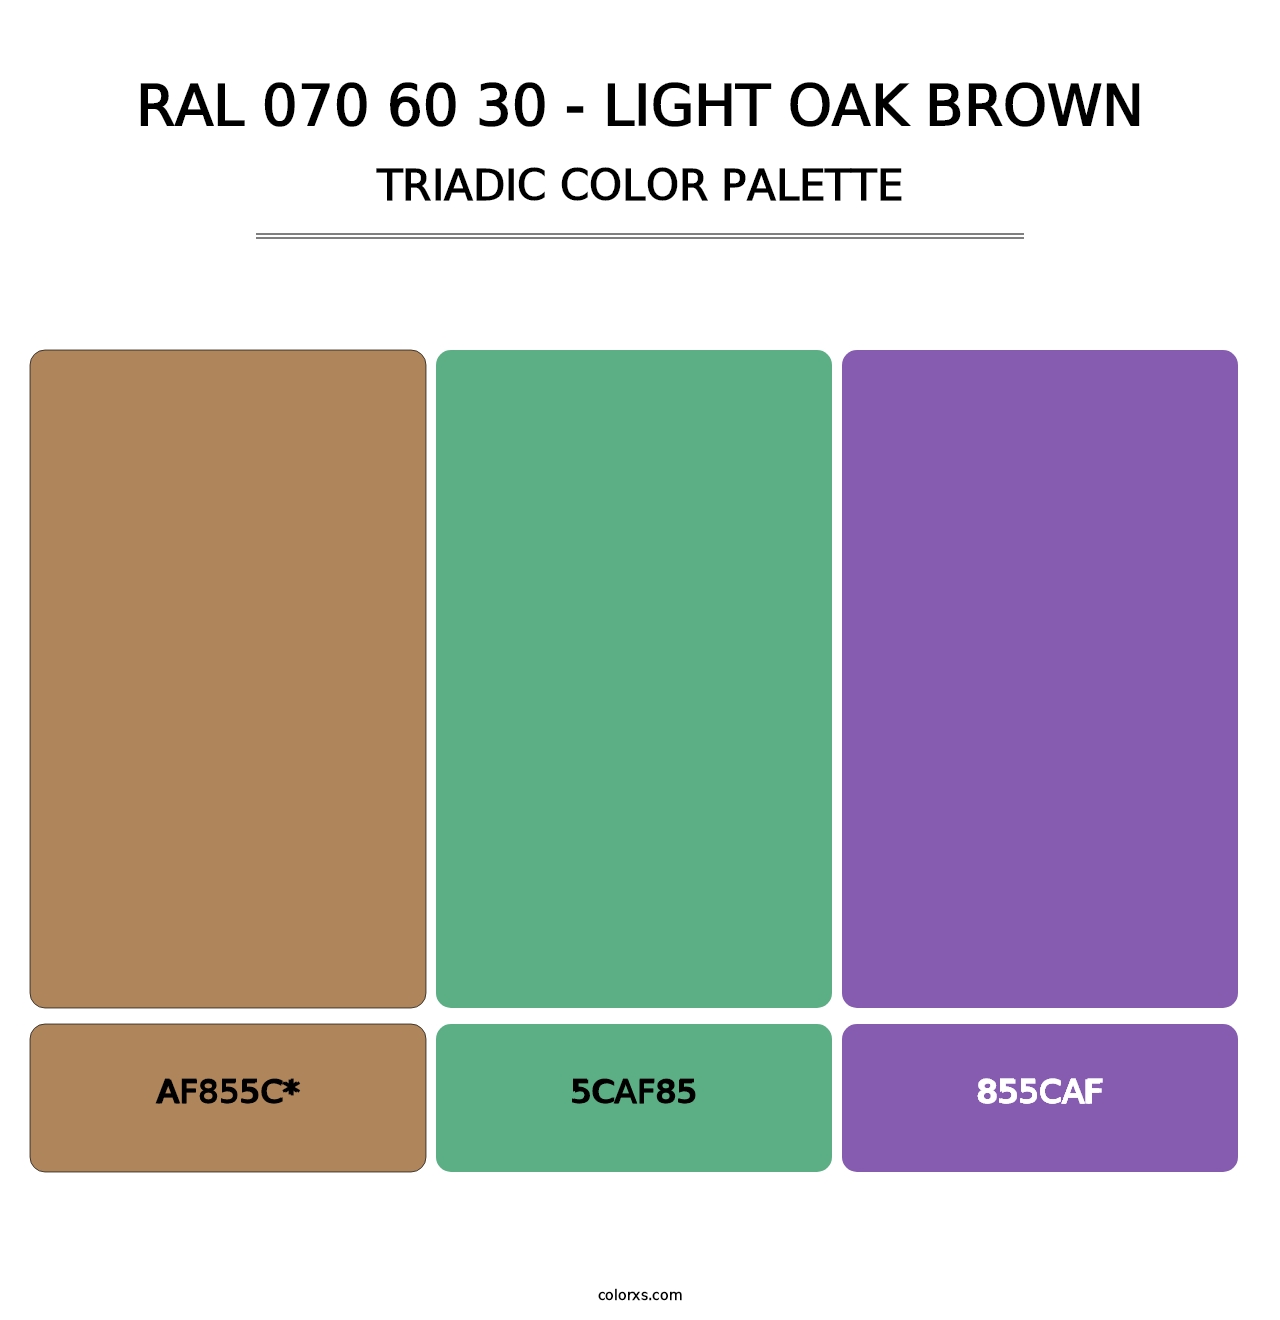 RAL 070 60 30 - Light Oak Brown - Triadic Color Palette